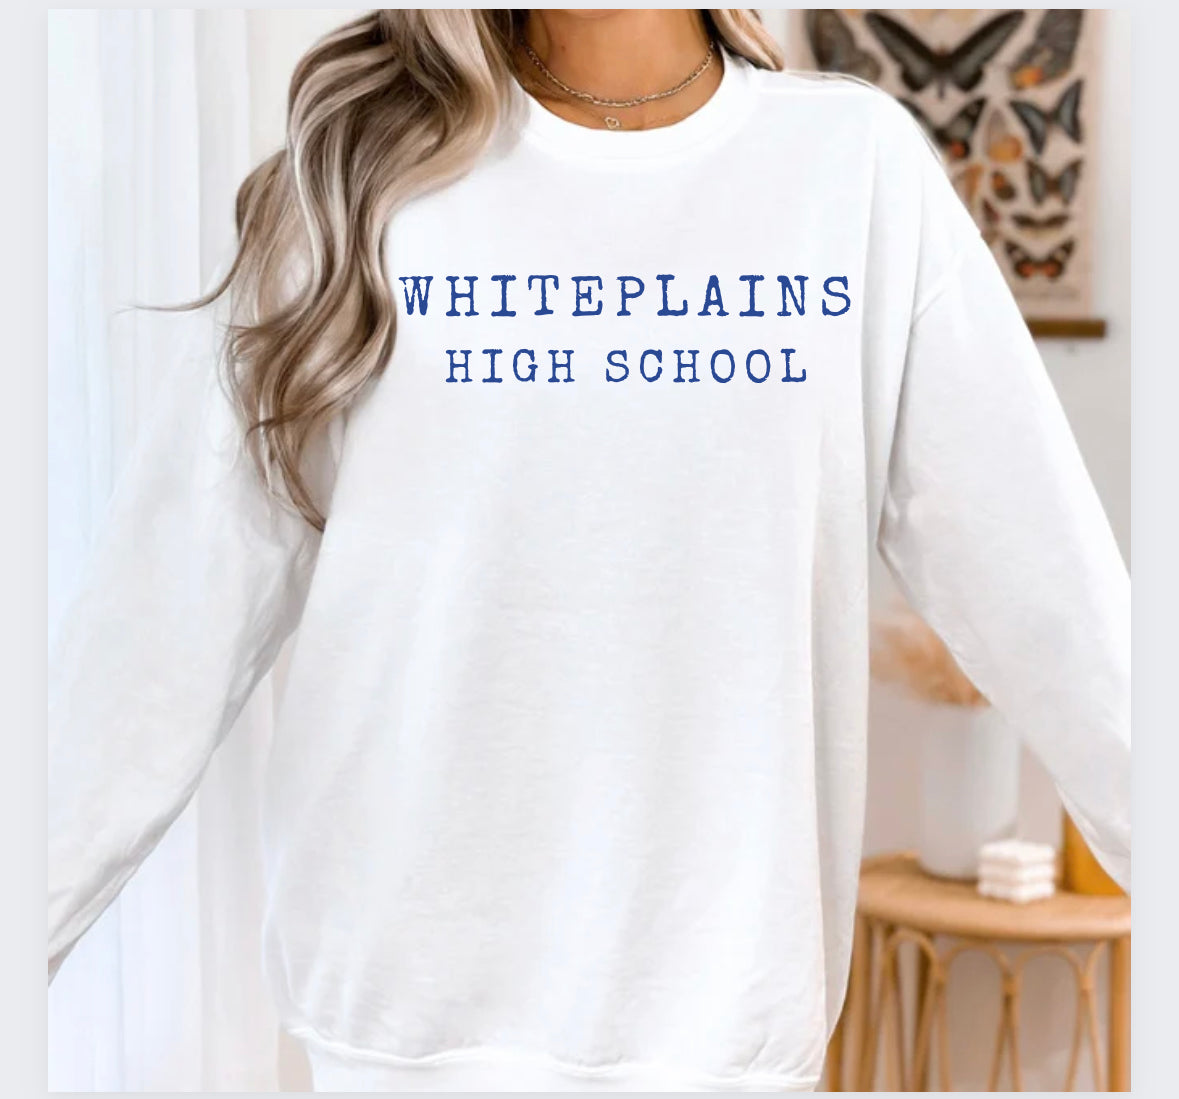 White plains High School